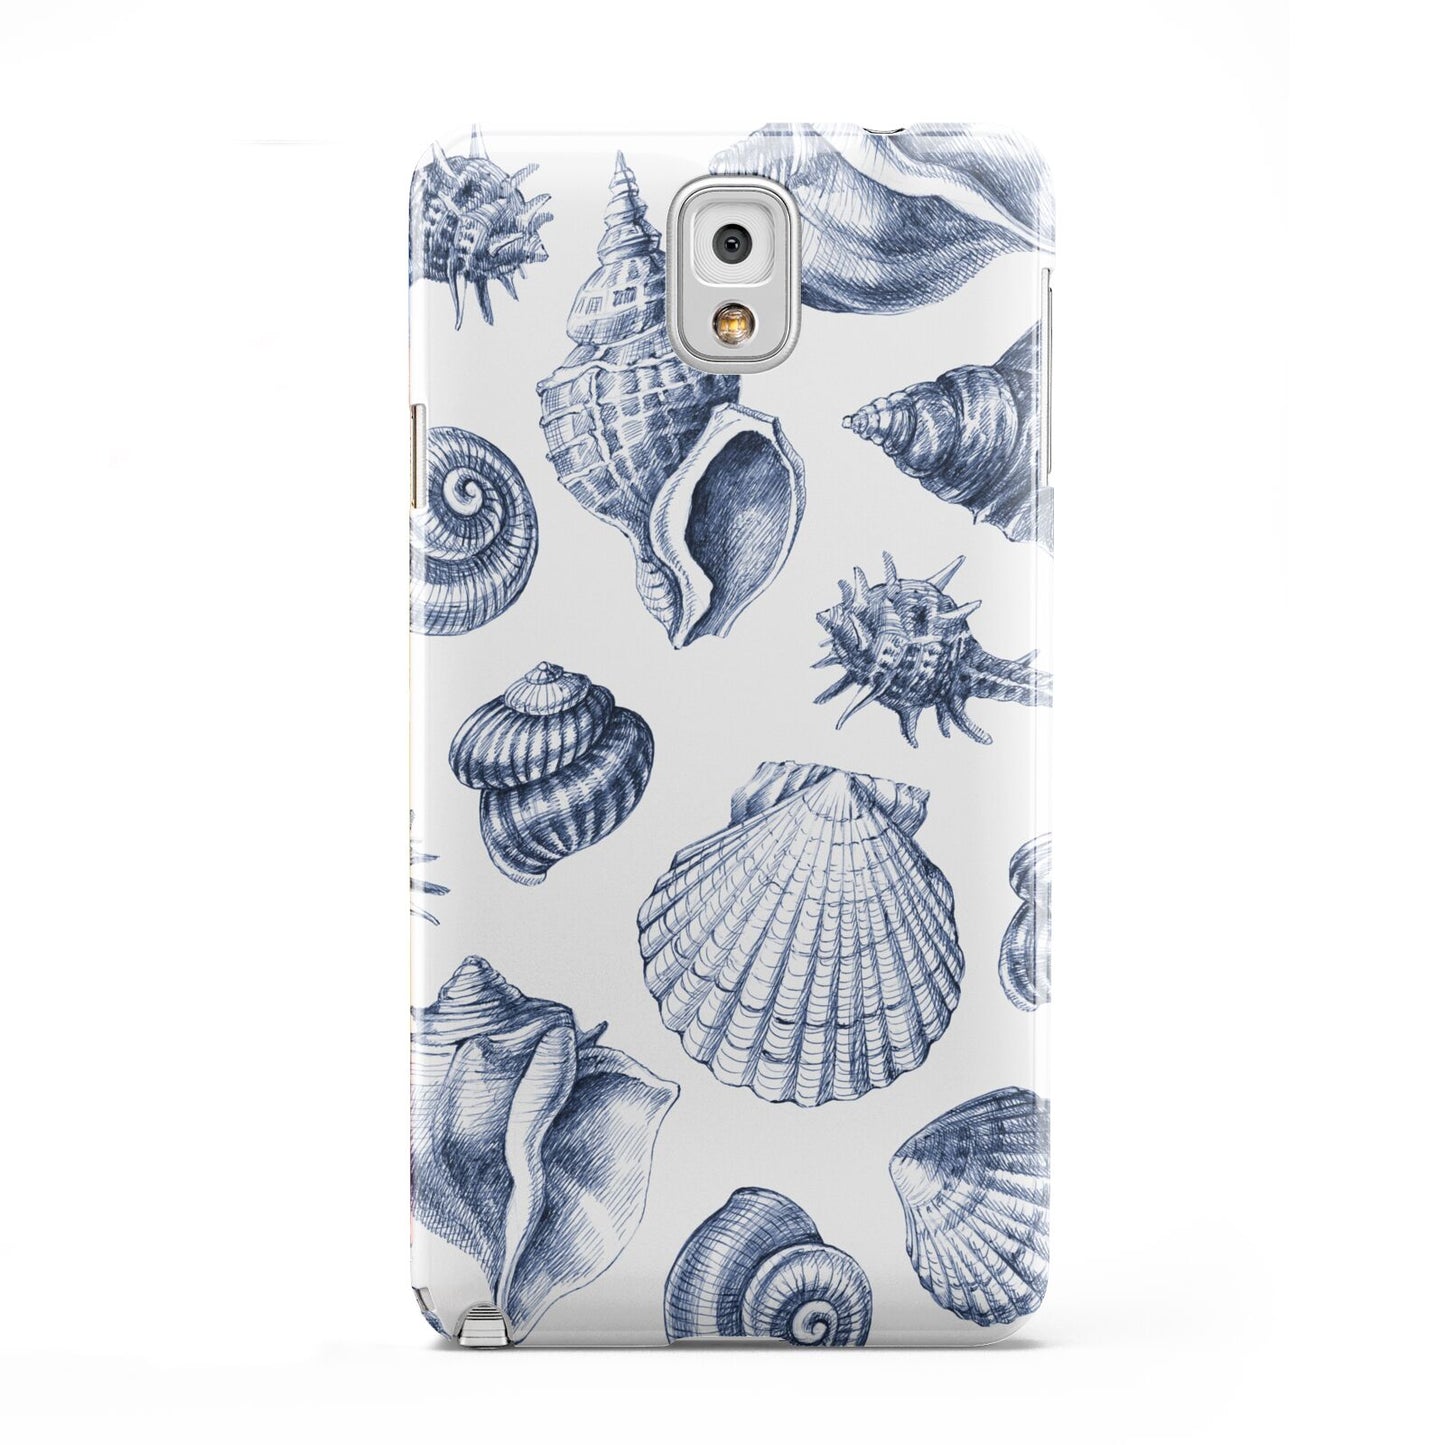 Shell Samsung Galaxy Note 3 Case